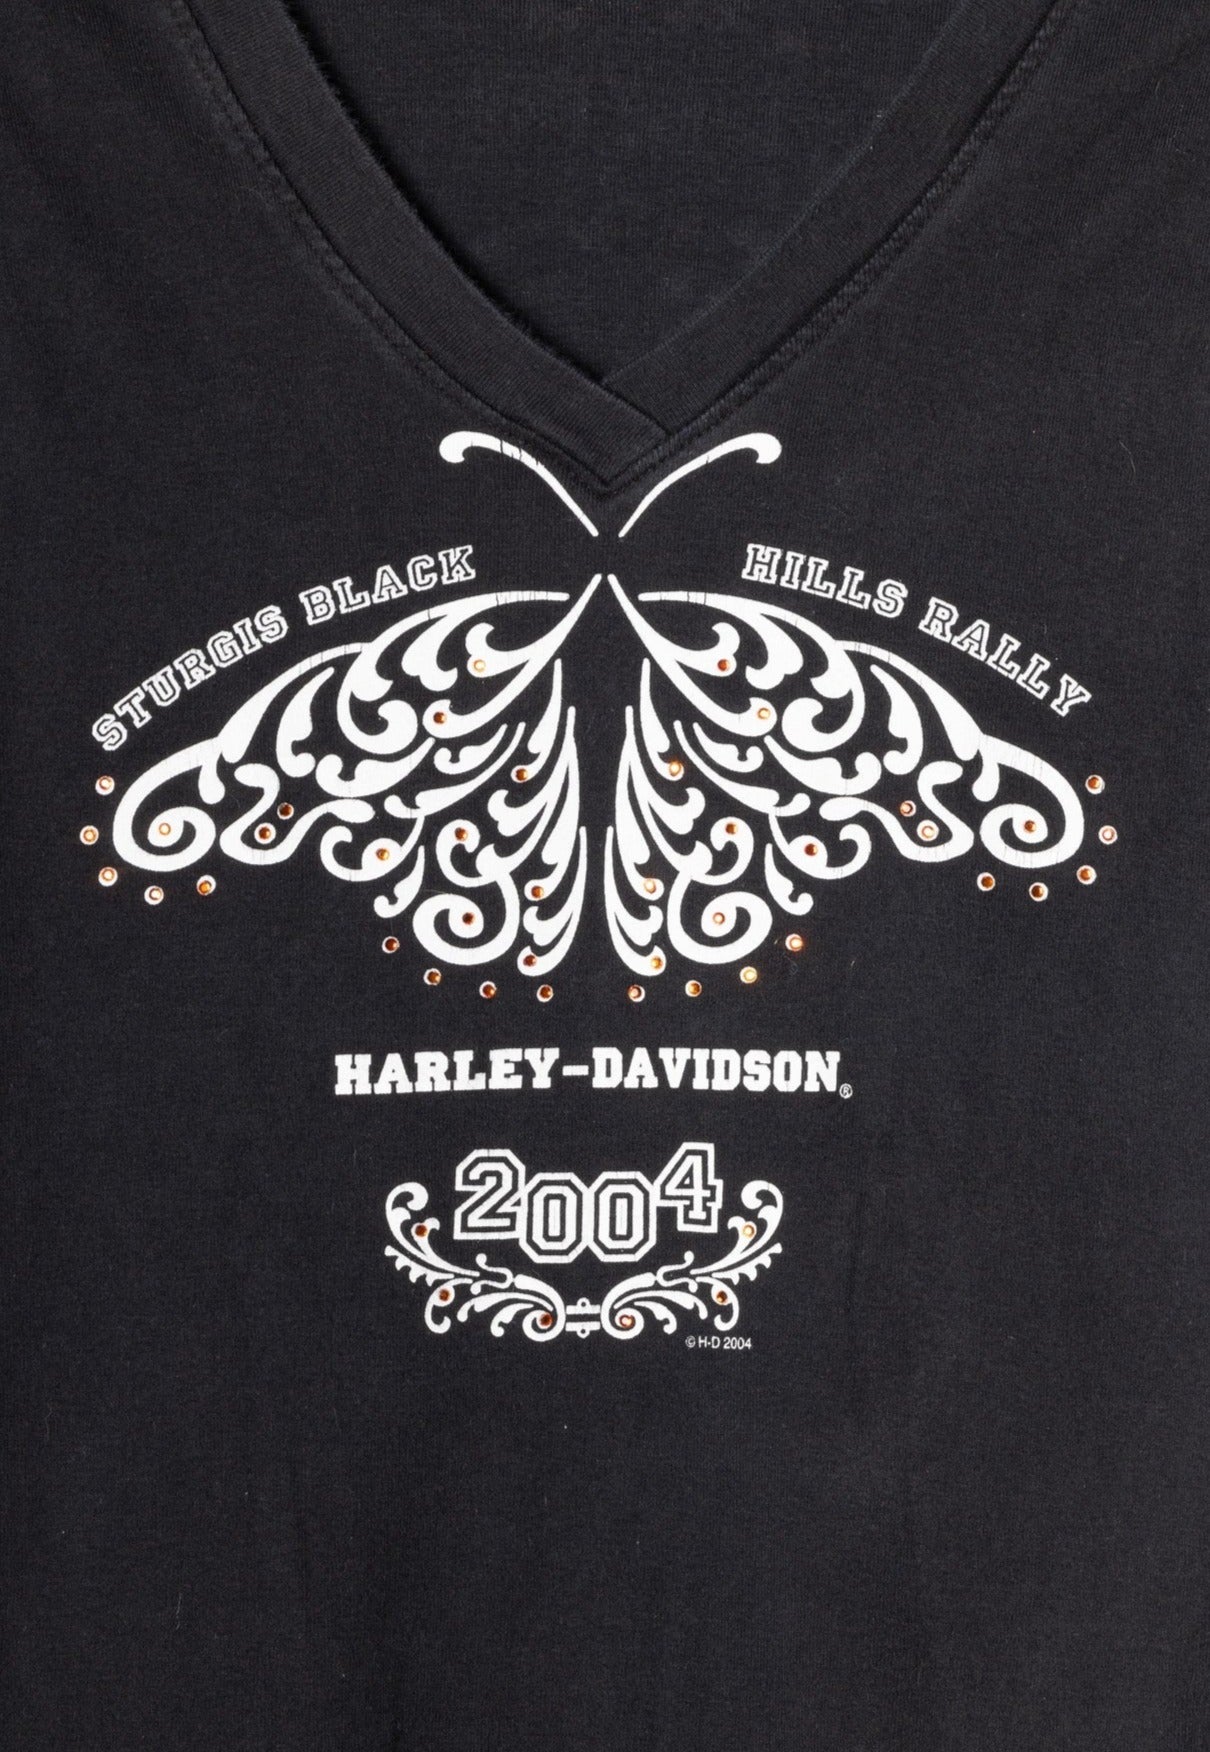 Vintage Harley Davidson 2004 Hills Rally Tank Top - Black tank tops with rhinestoned butterfly print. Size XL (women's slim).